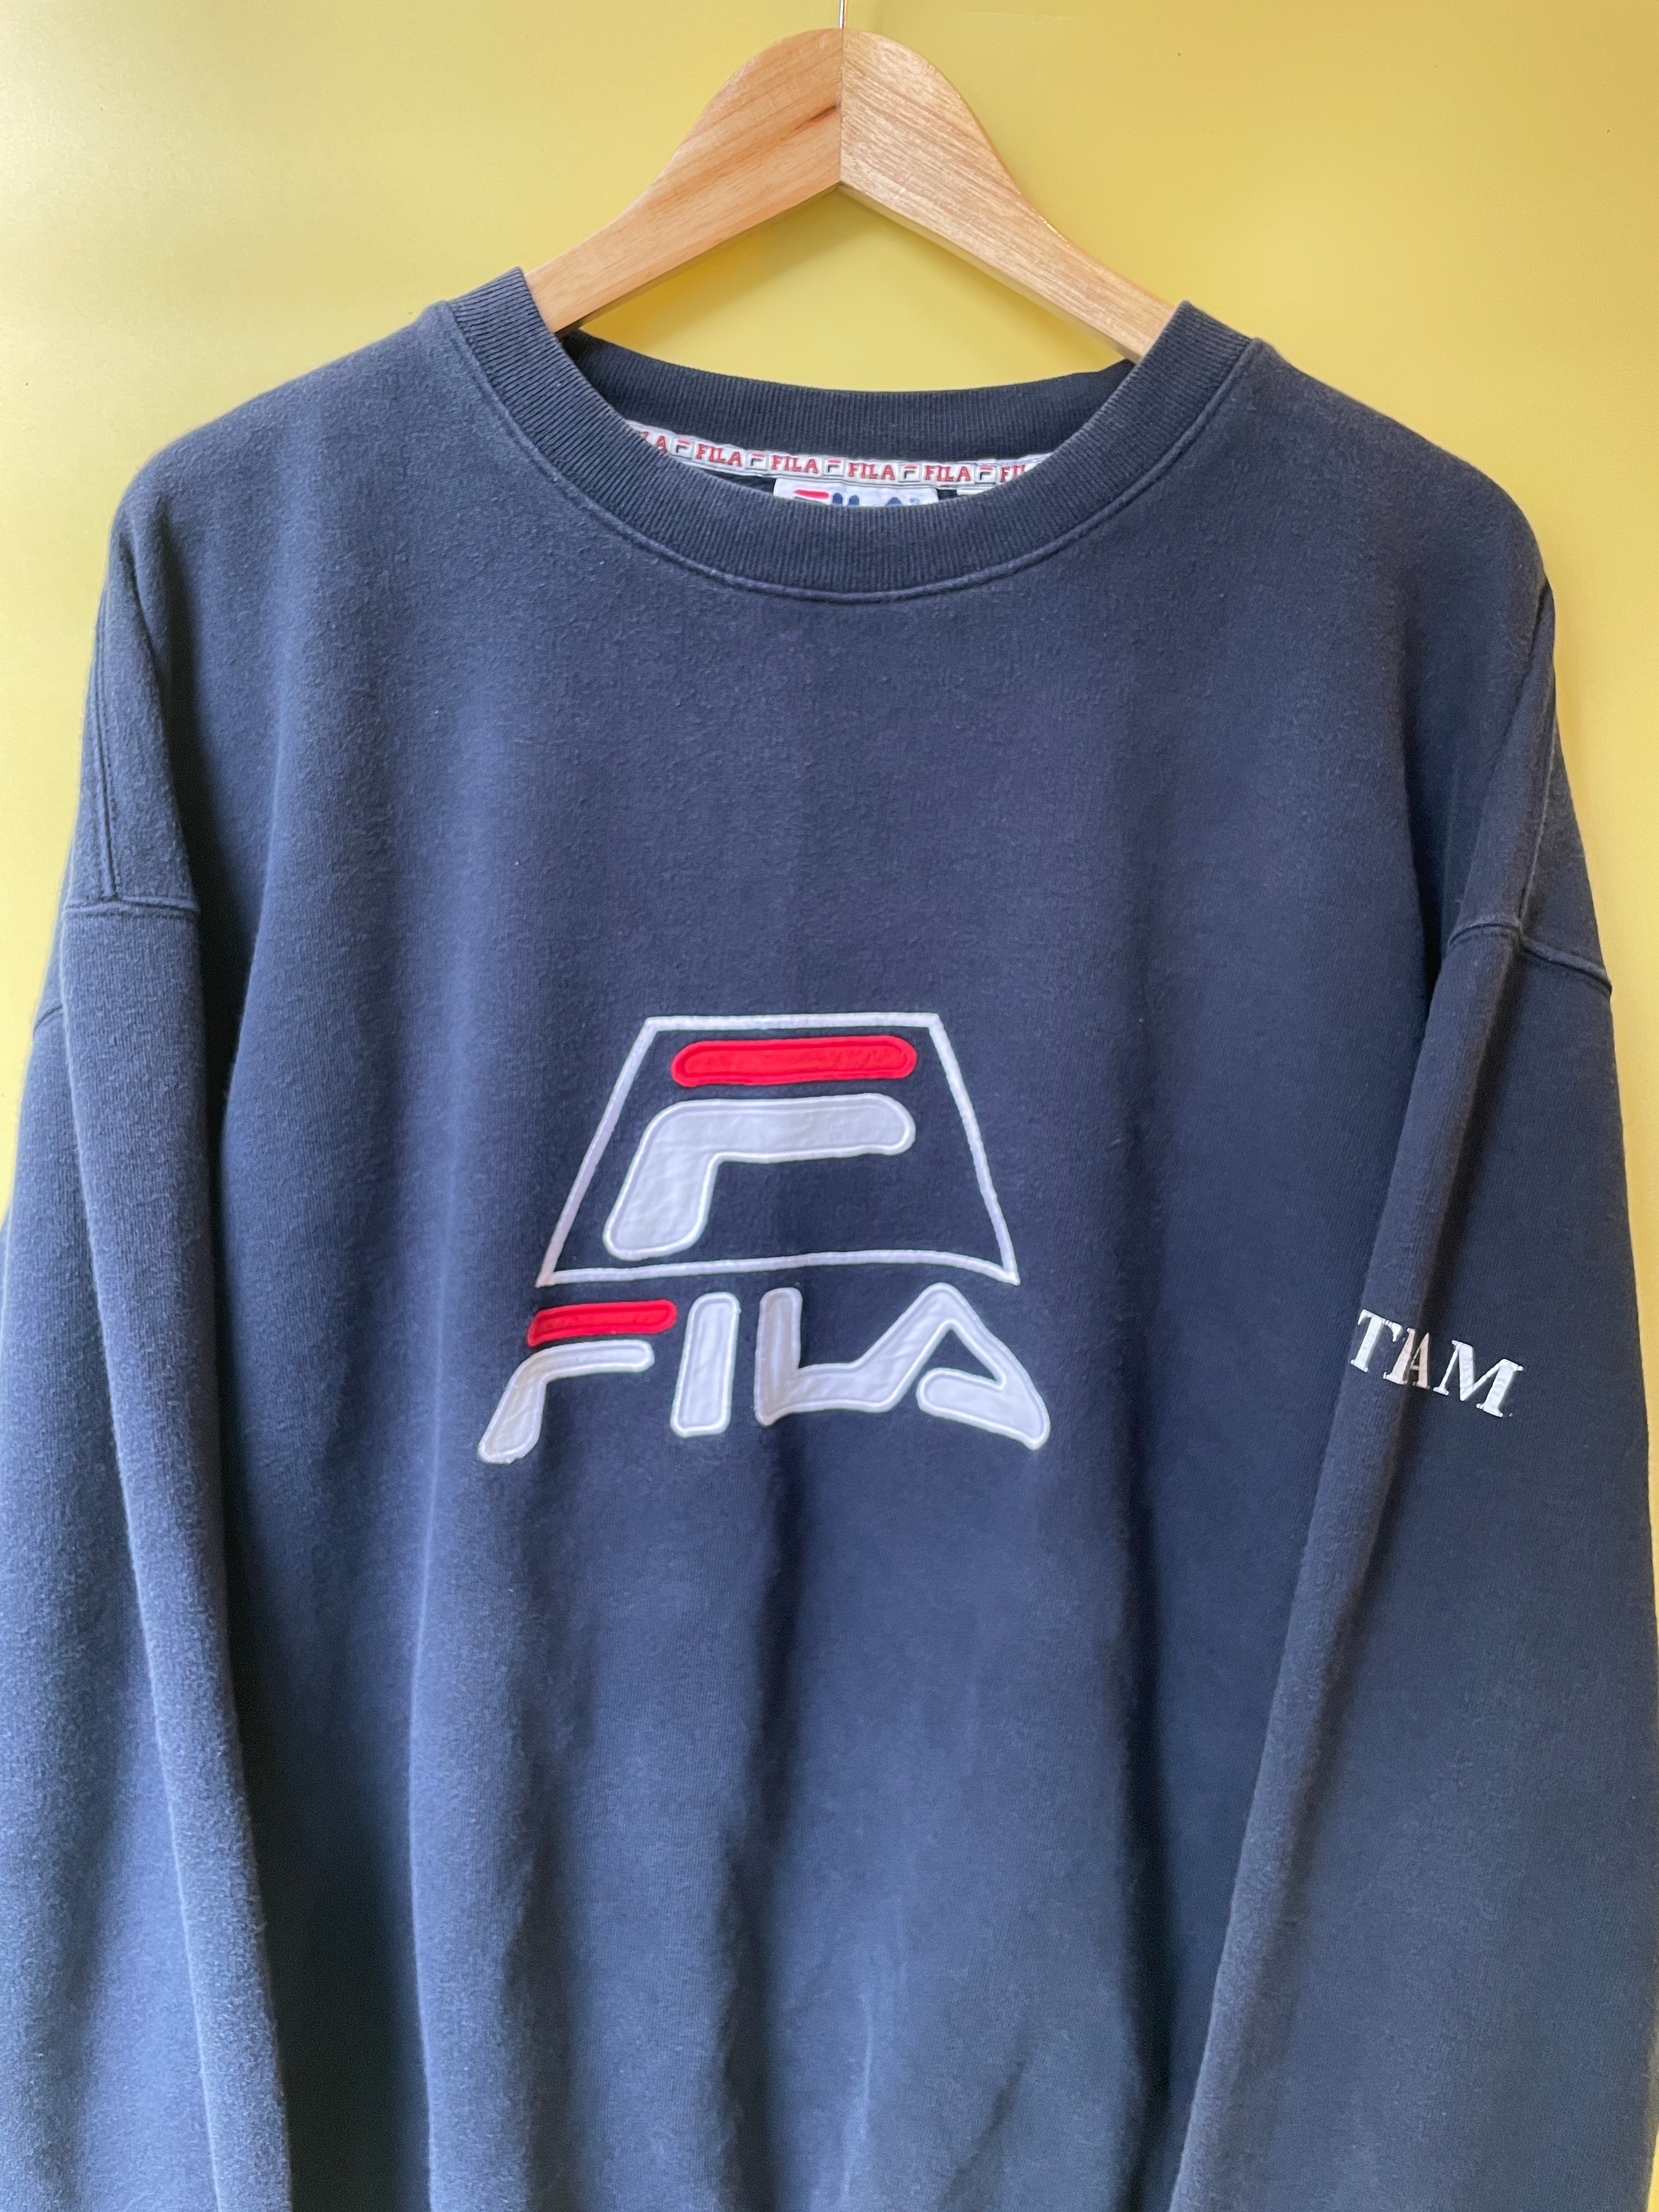 L Oversized True Vintage Fila Sweater